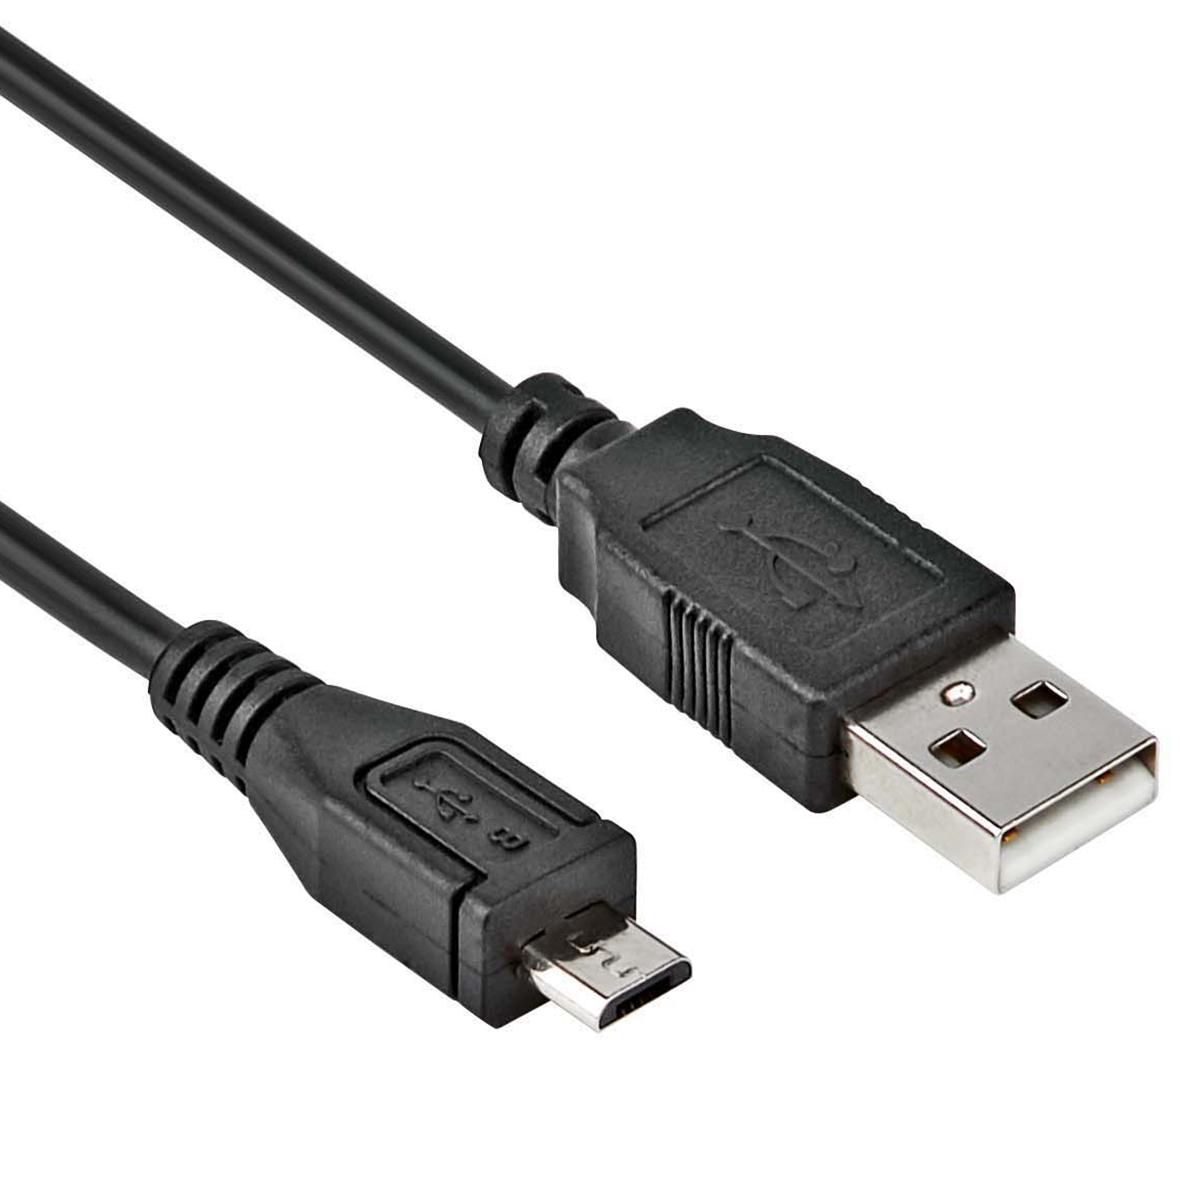 USB Micro kabel - Allteq